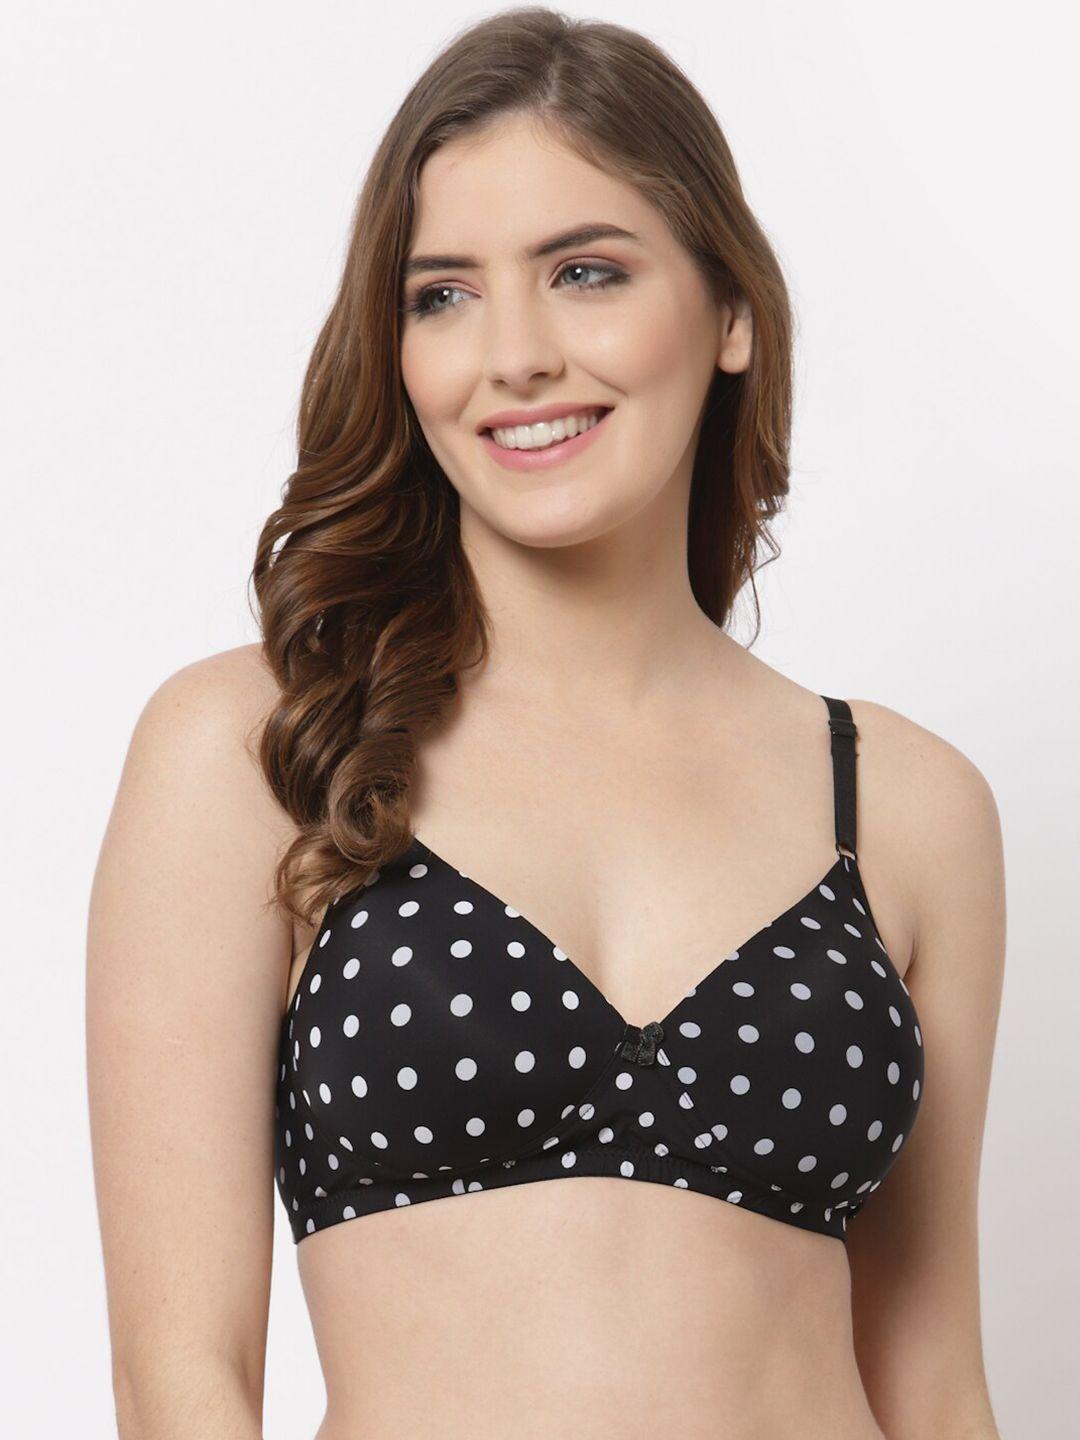 cukoo-black-&-white-polka-dots-printed-everyday-bra---lightly-padded